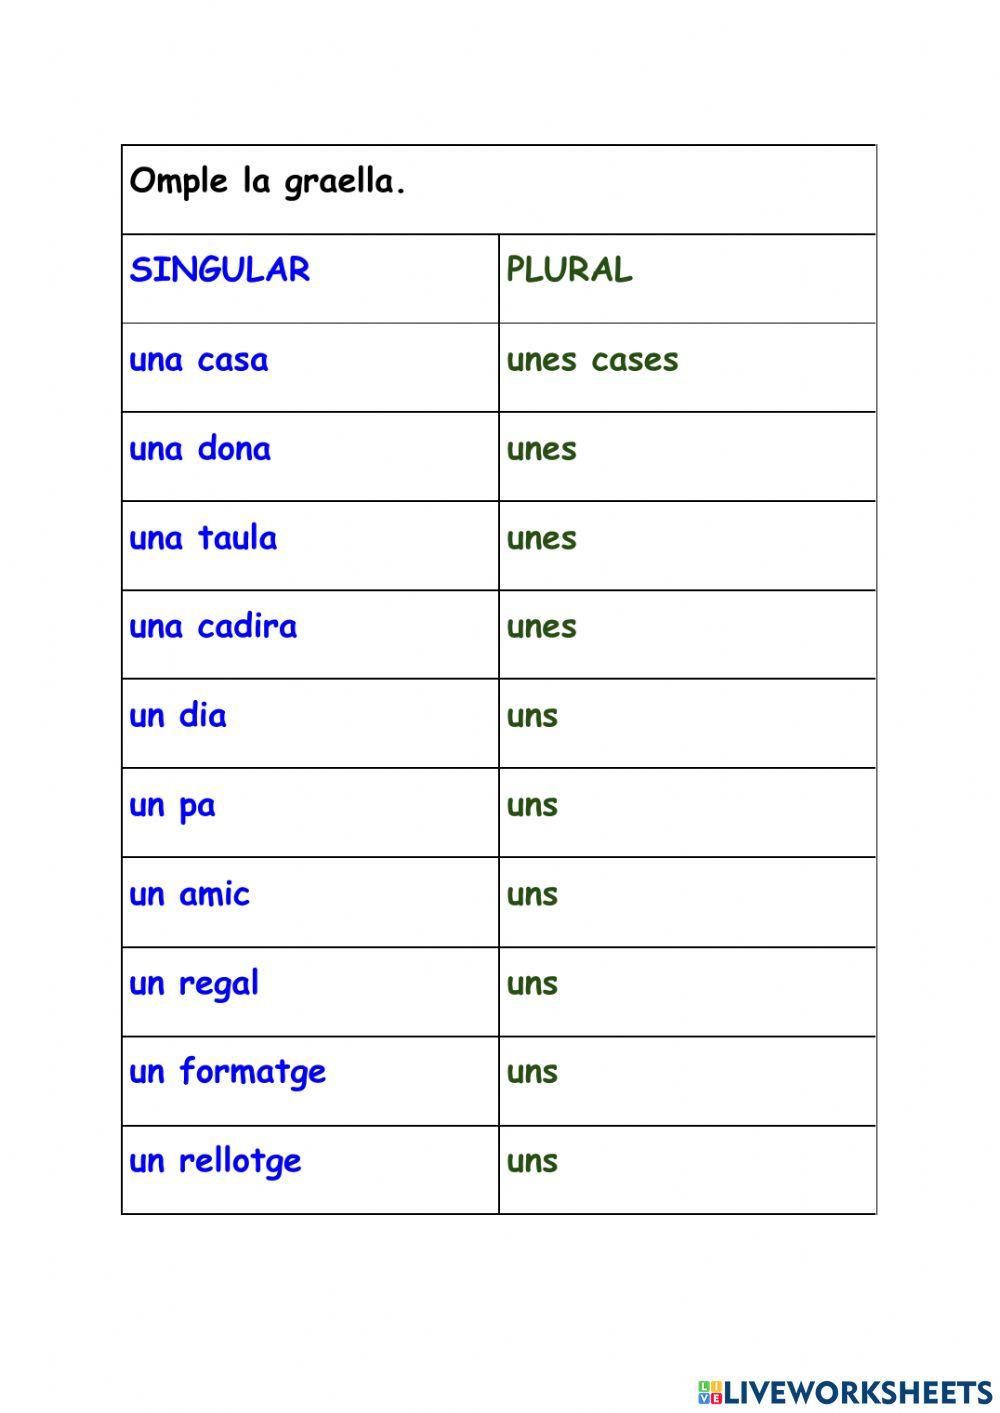 Singular-Plural